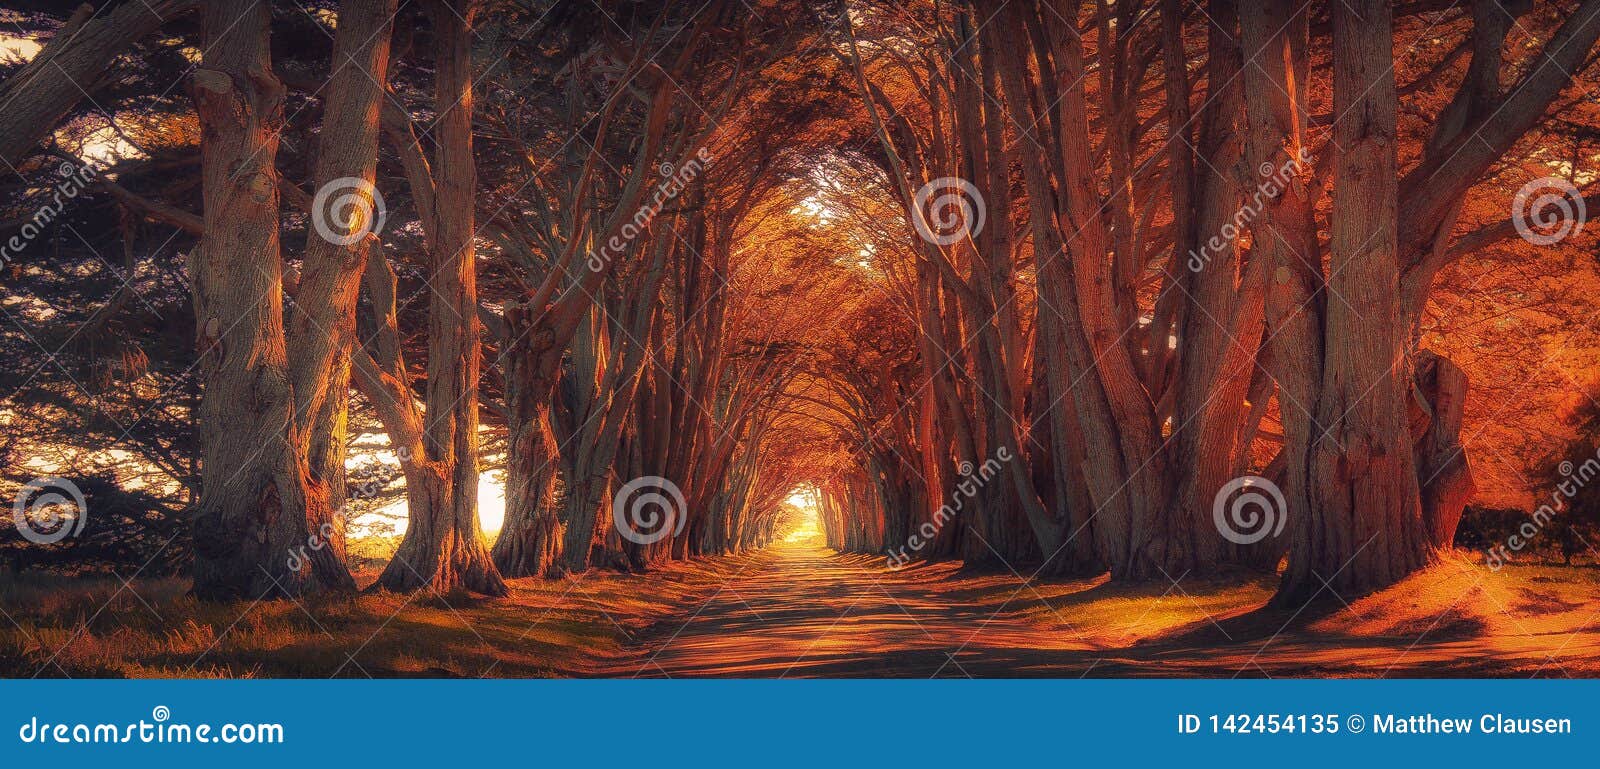 cyrpus tree tunnel at sunset